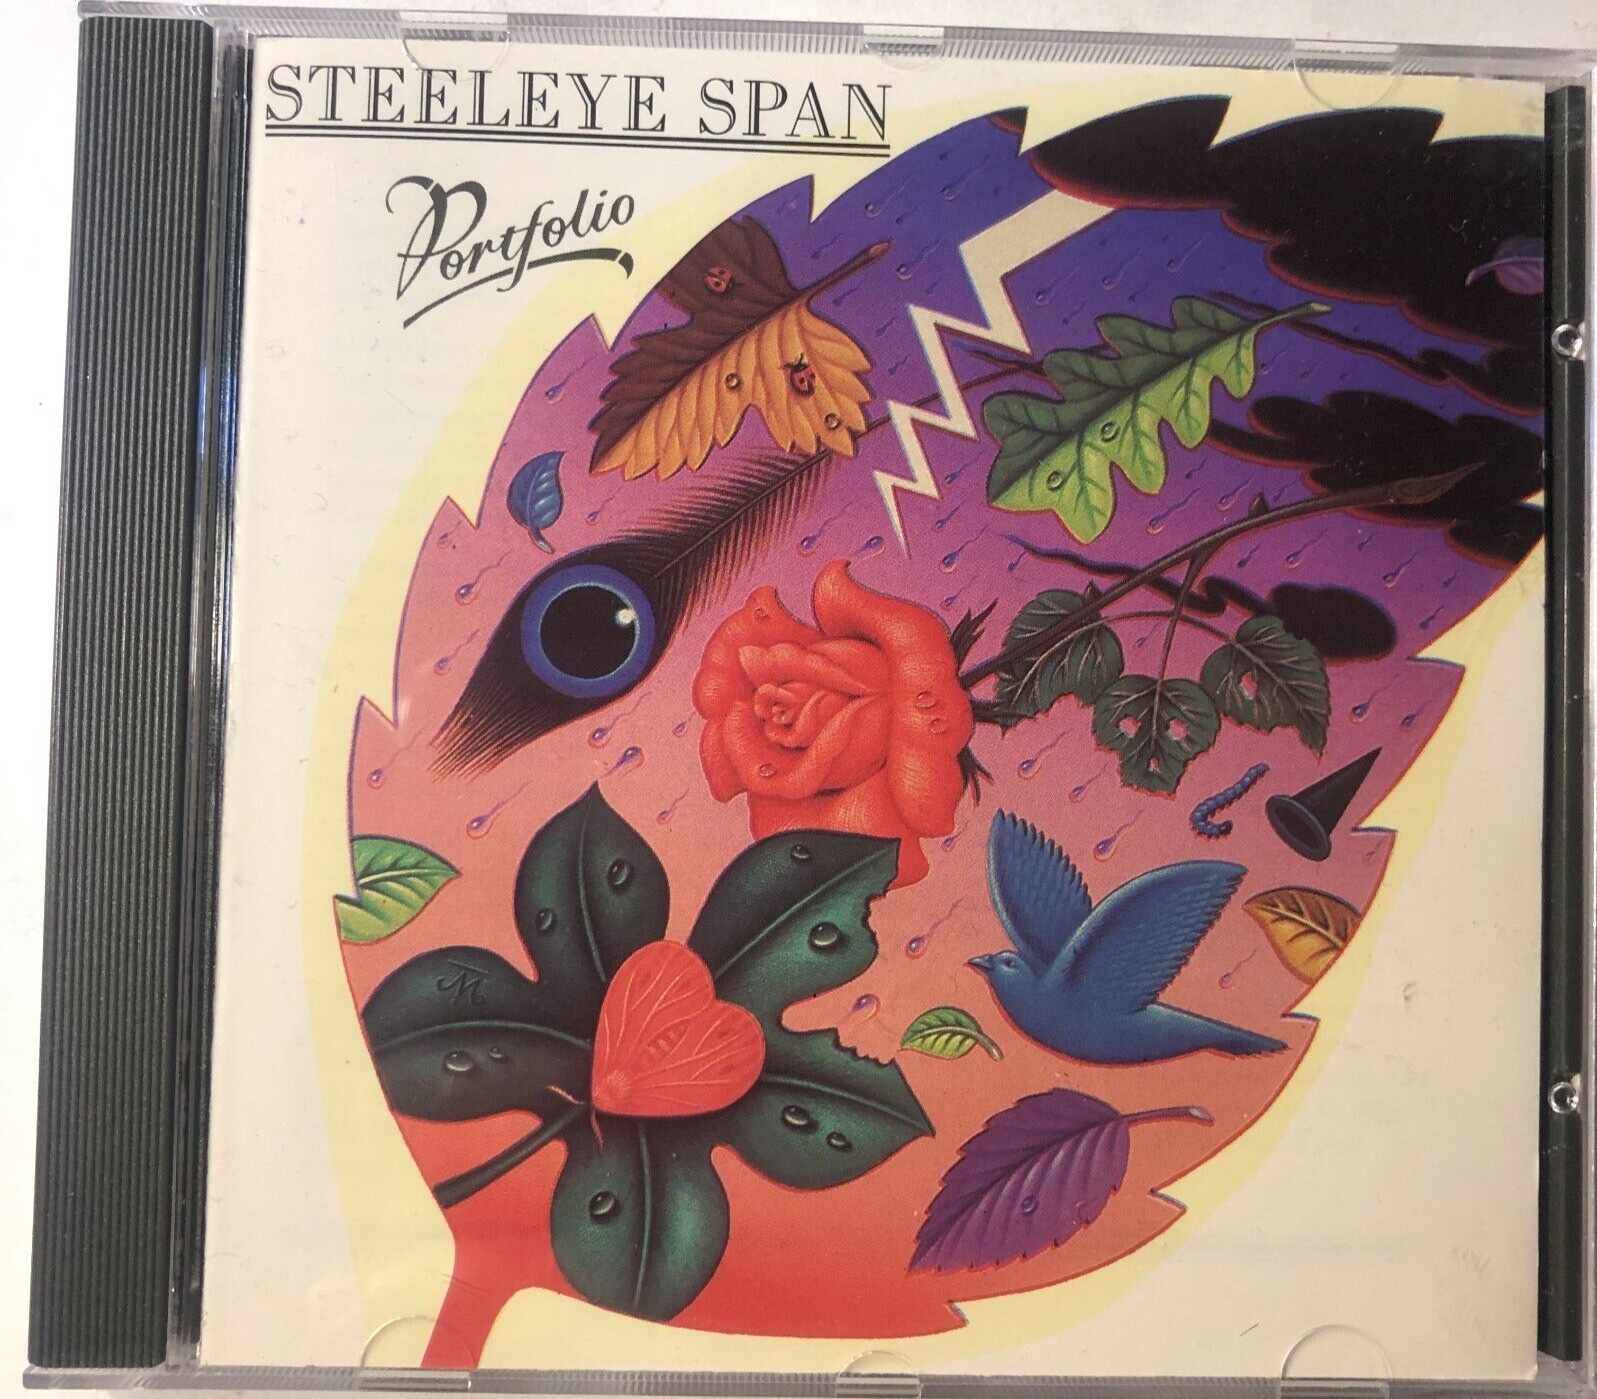 Portfolio by Steeleye Span (CD1989 Shanachie) Greatest Hits celtic rock